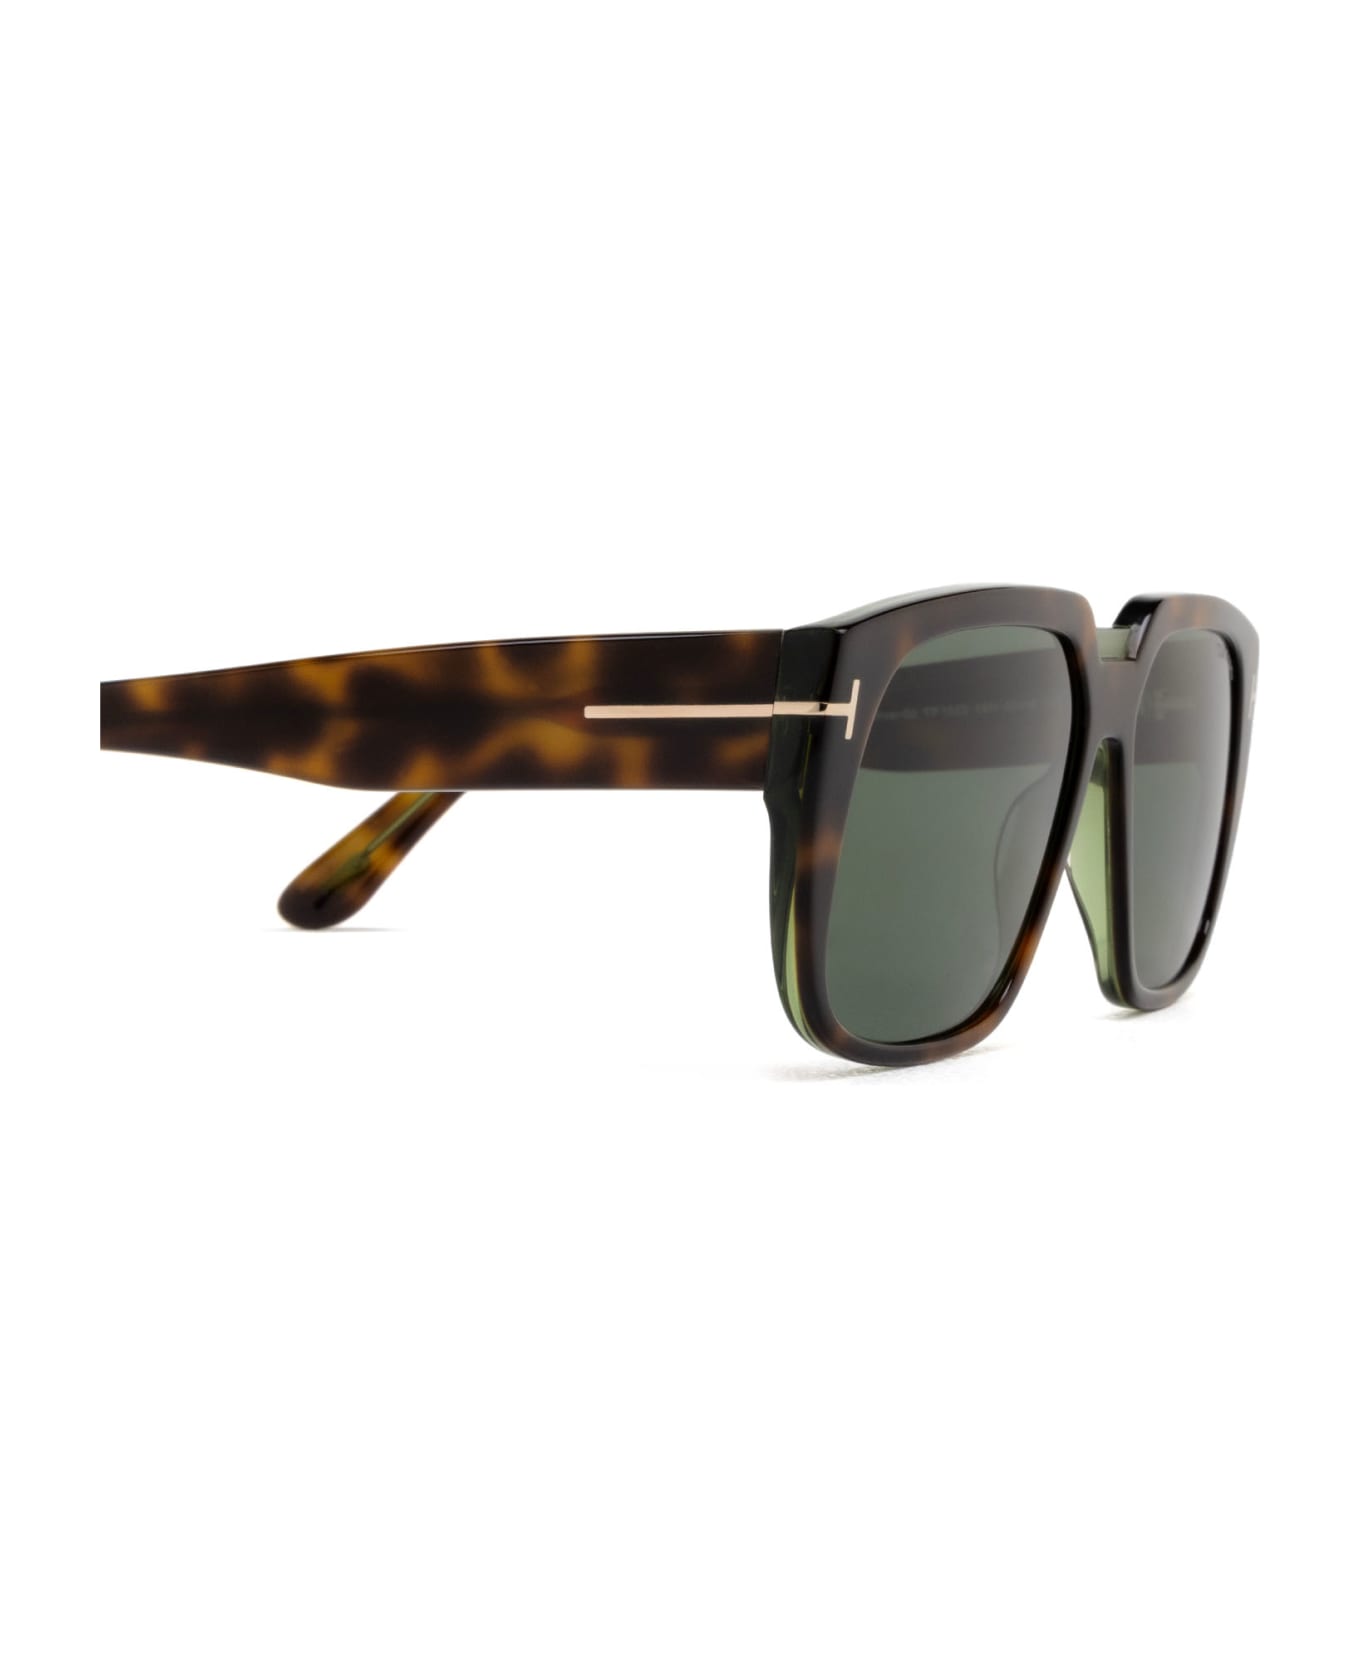 Tom Ford Eyewear Ft1025 Havana Sunglasses - Havana